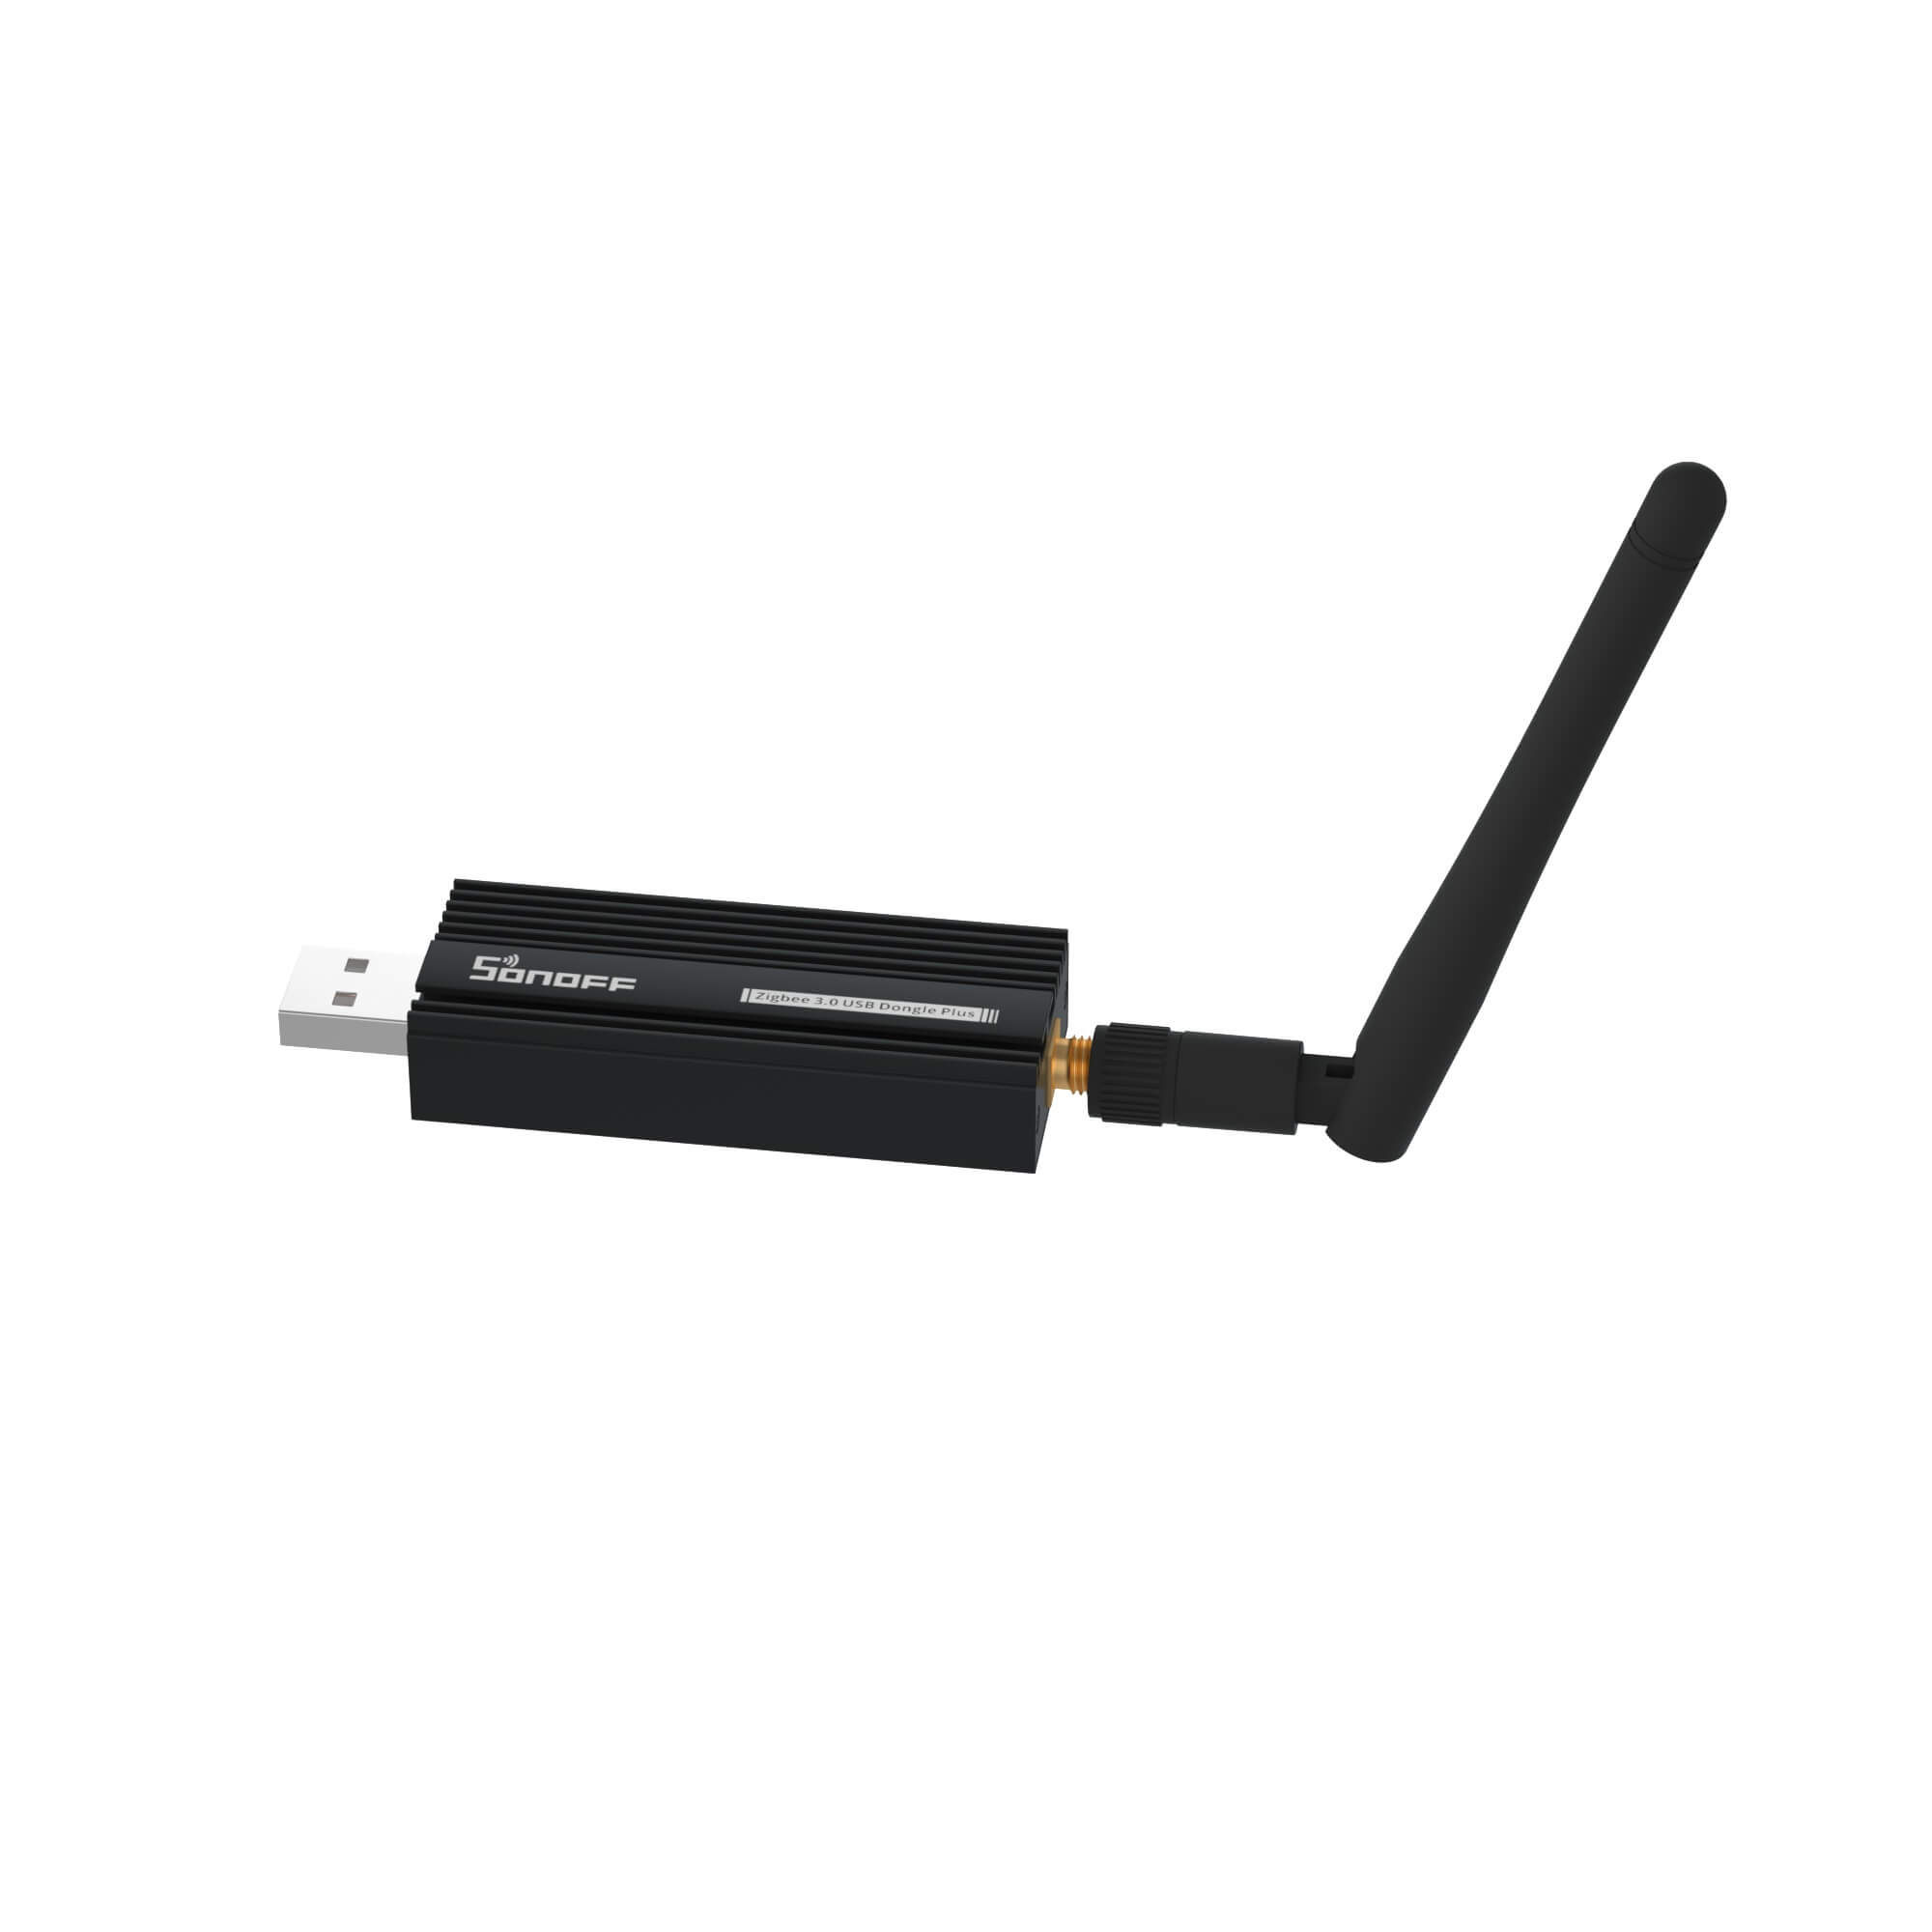 Sonoff Zigbee 3.0 USB Dongle Plus Gateway Signal Amplifier